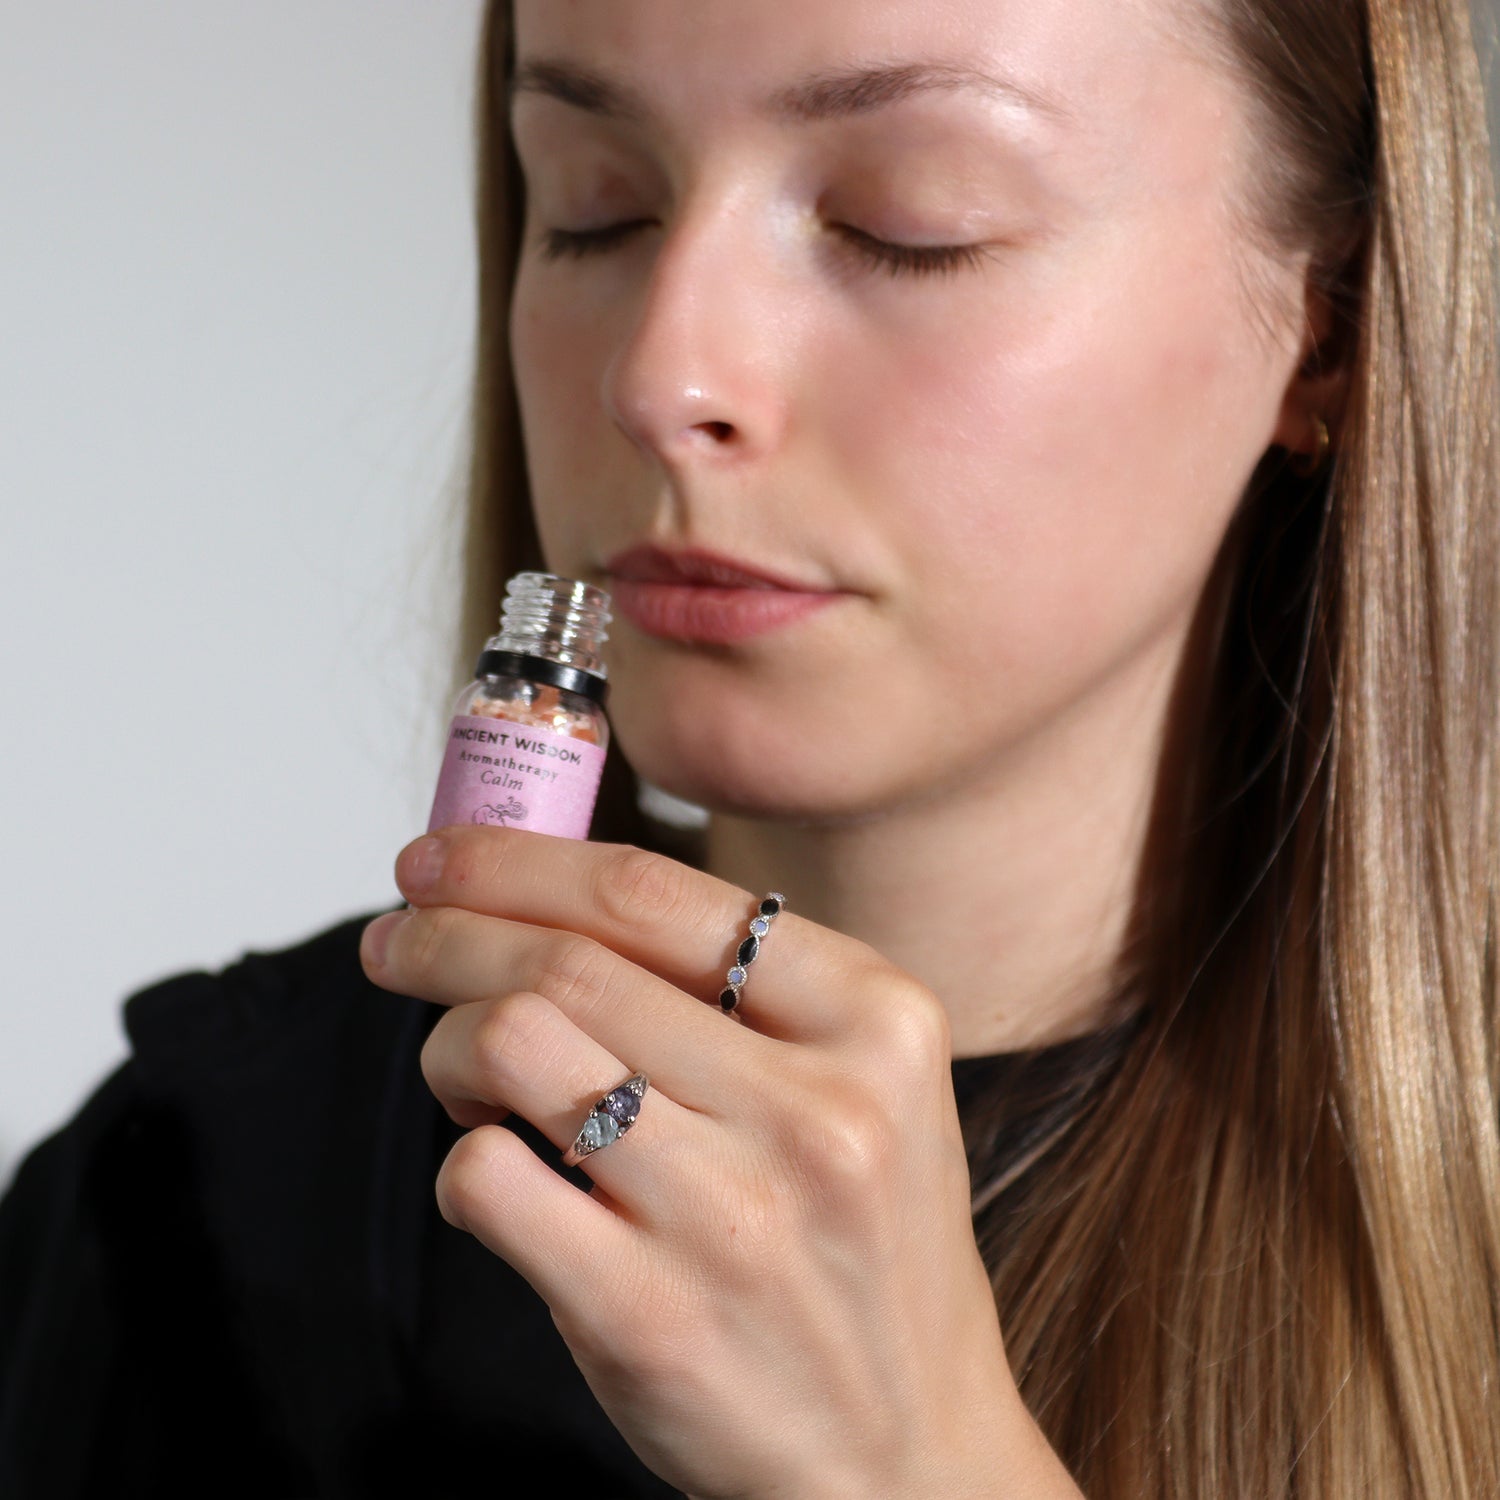 Calm Aromatherapy Smelling Salt